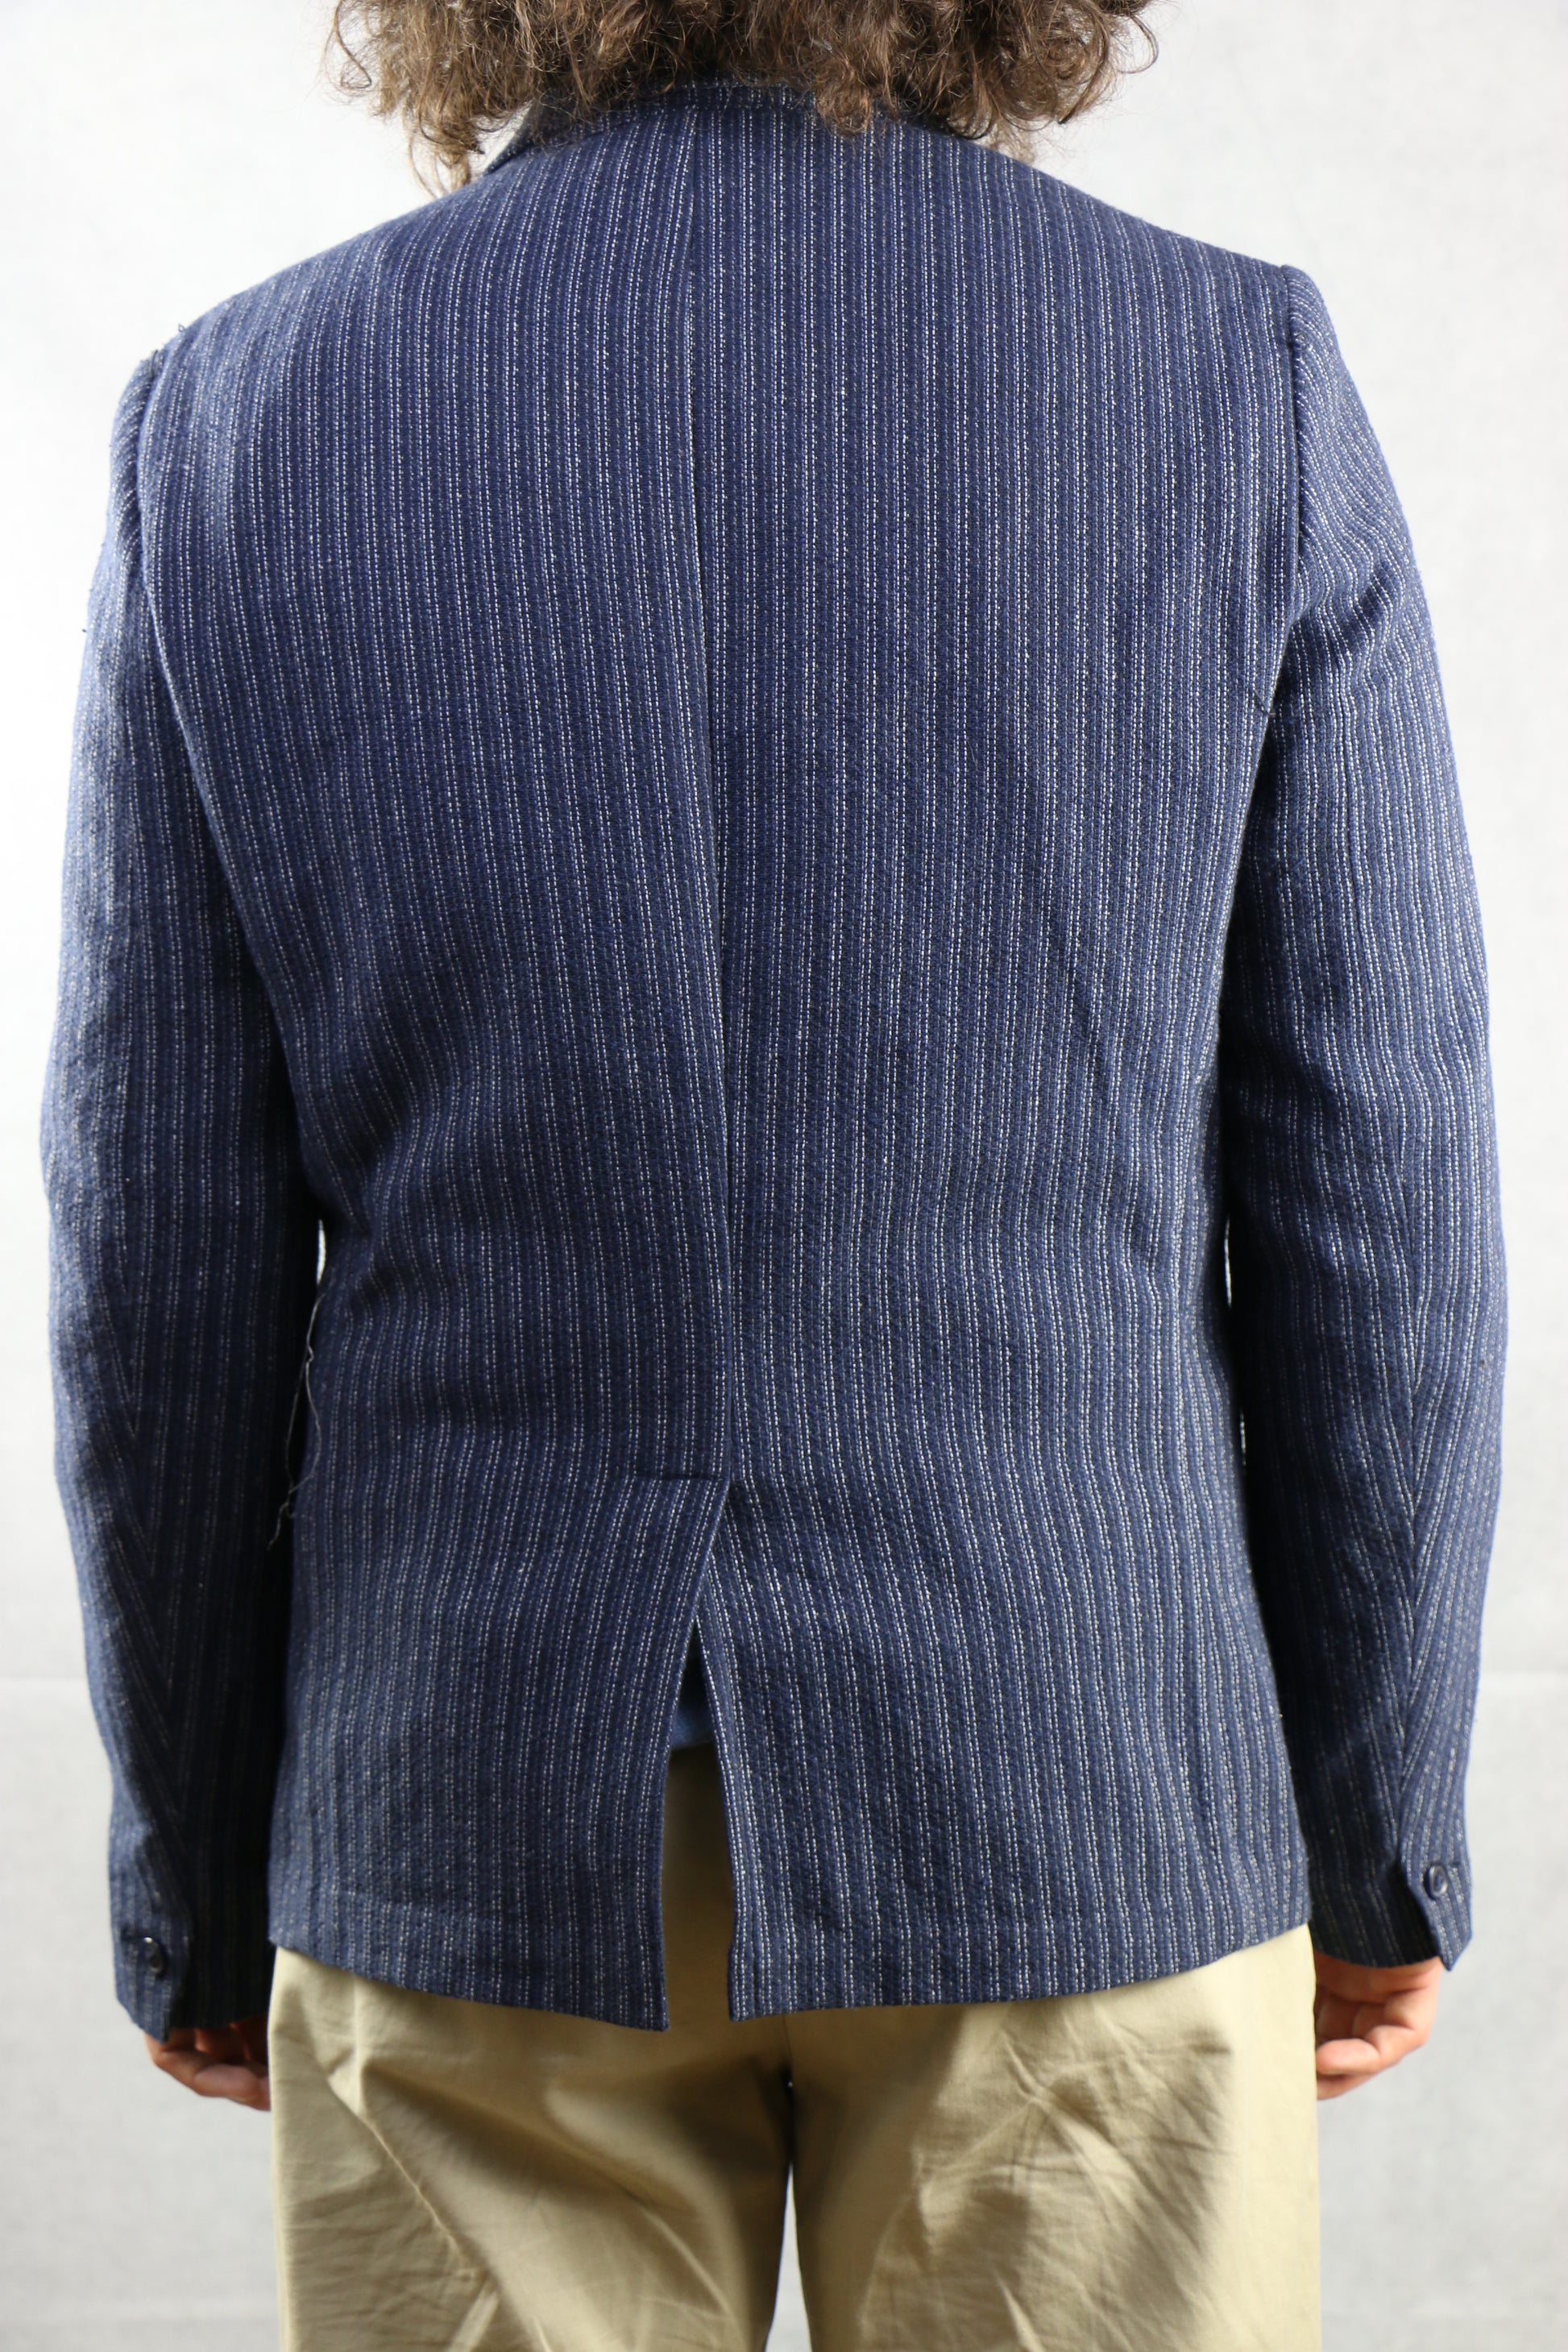 Altatensione Suit Jacket - vintage clothing clochard92.com